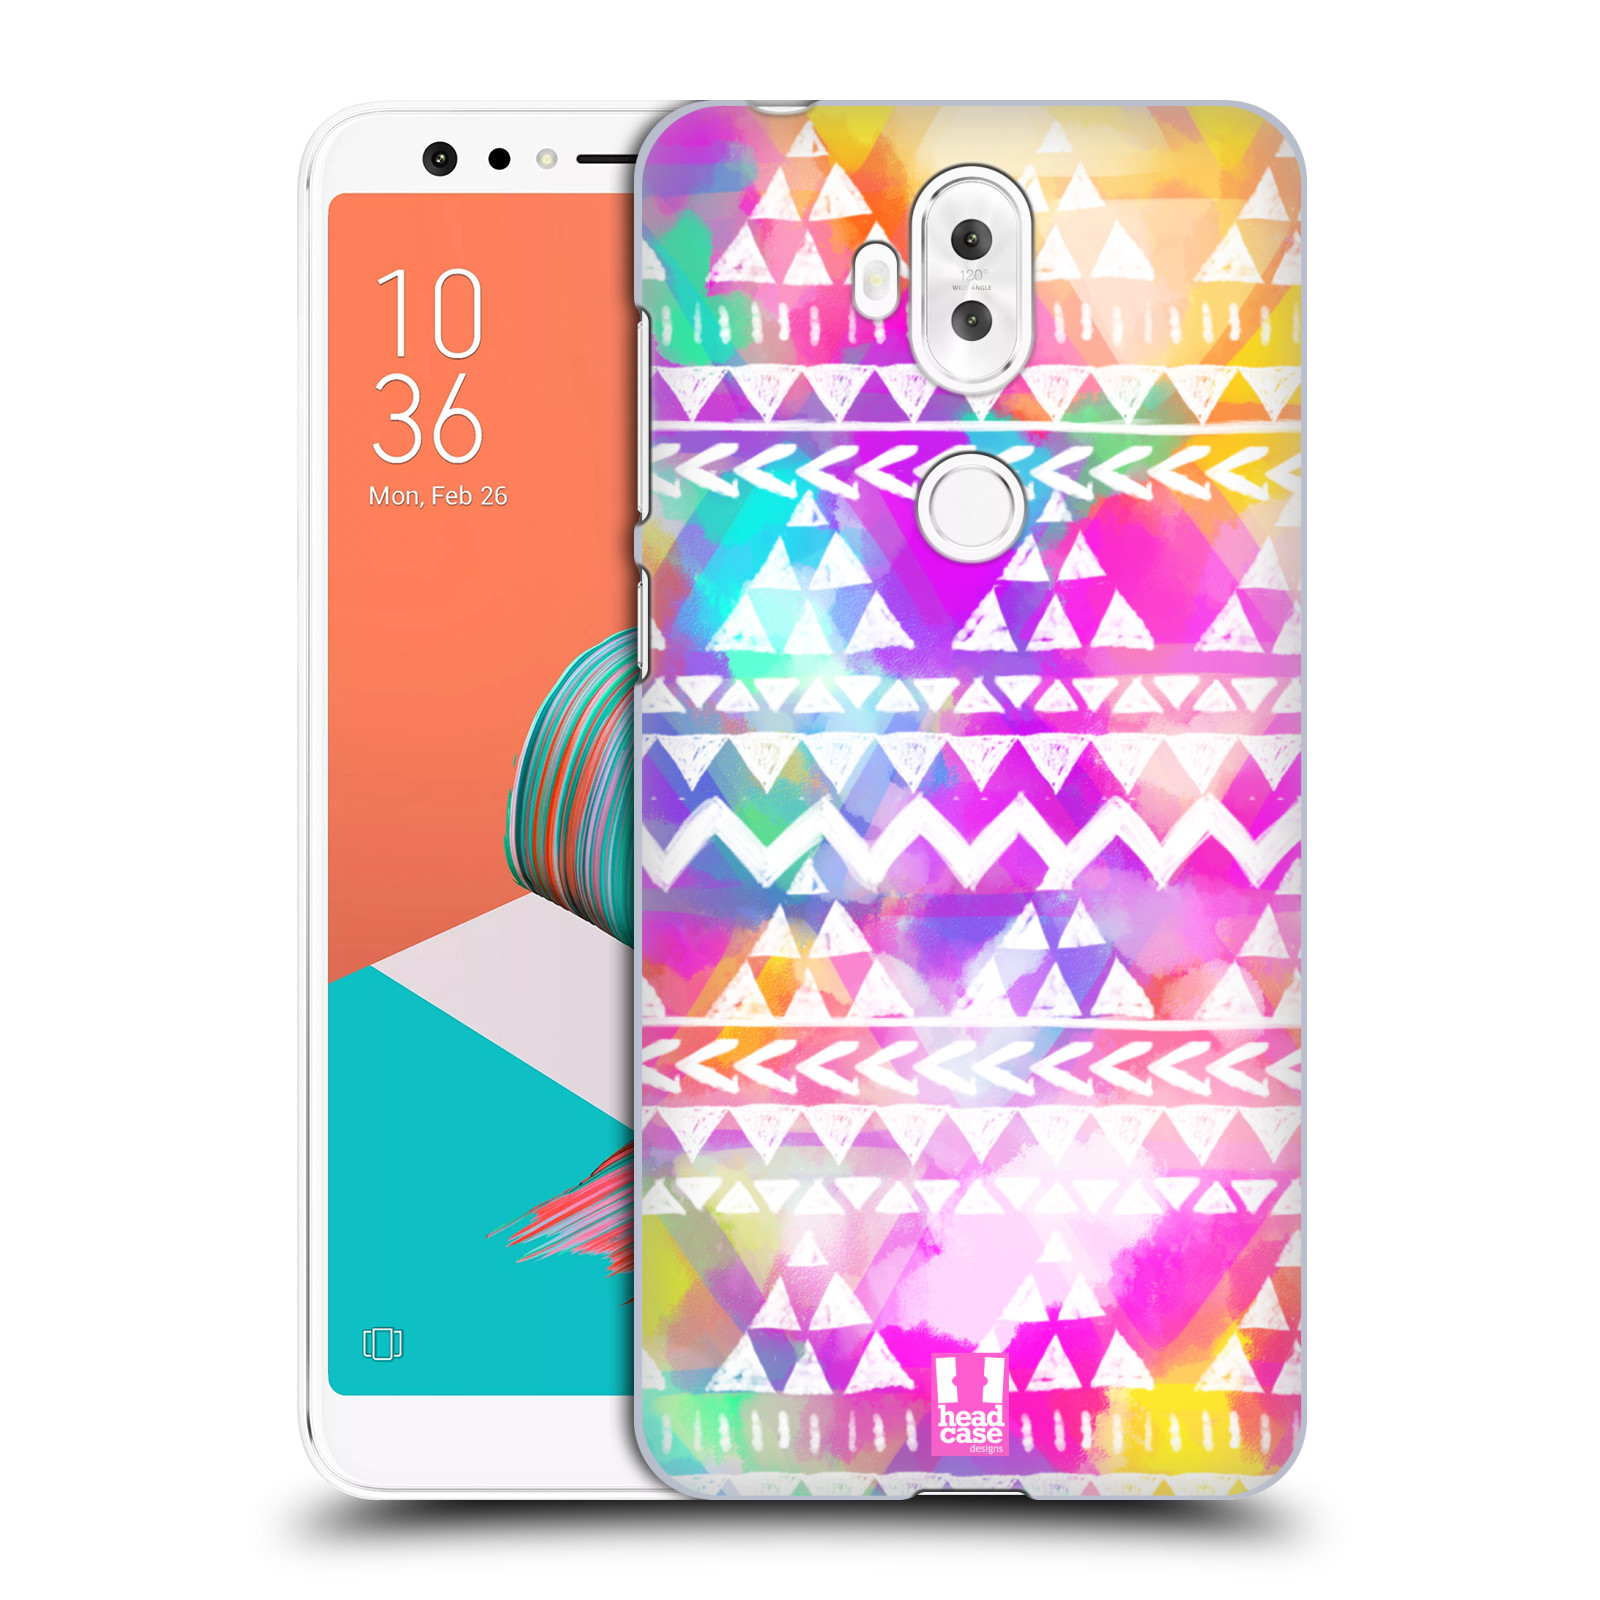 HEAD CASE plastový obal na mobil Asus Zenfone 5 LITE ZC600KL vzor CIK CAK barevné znaky ZÁŘIVA RŮŽOVÁ